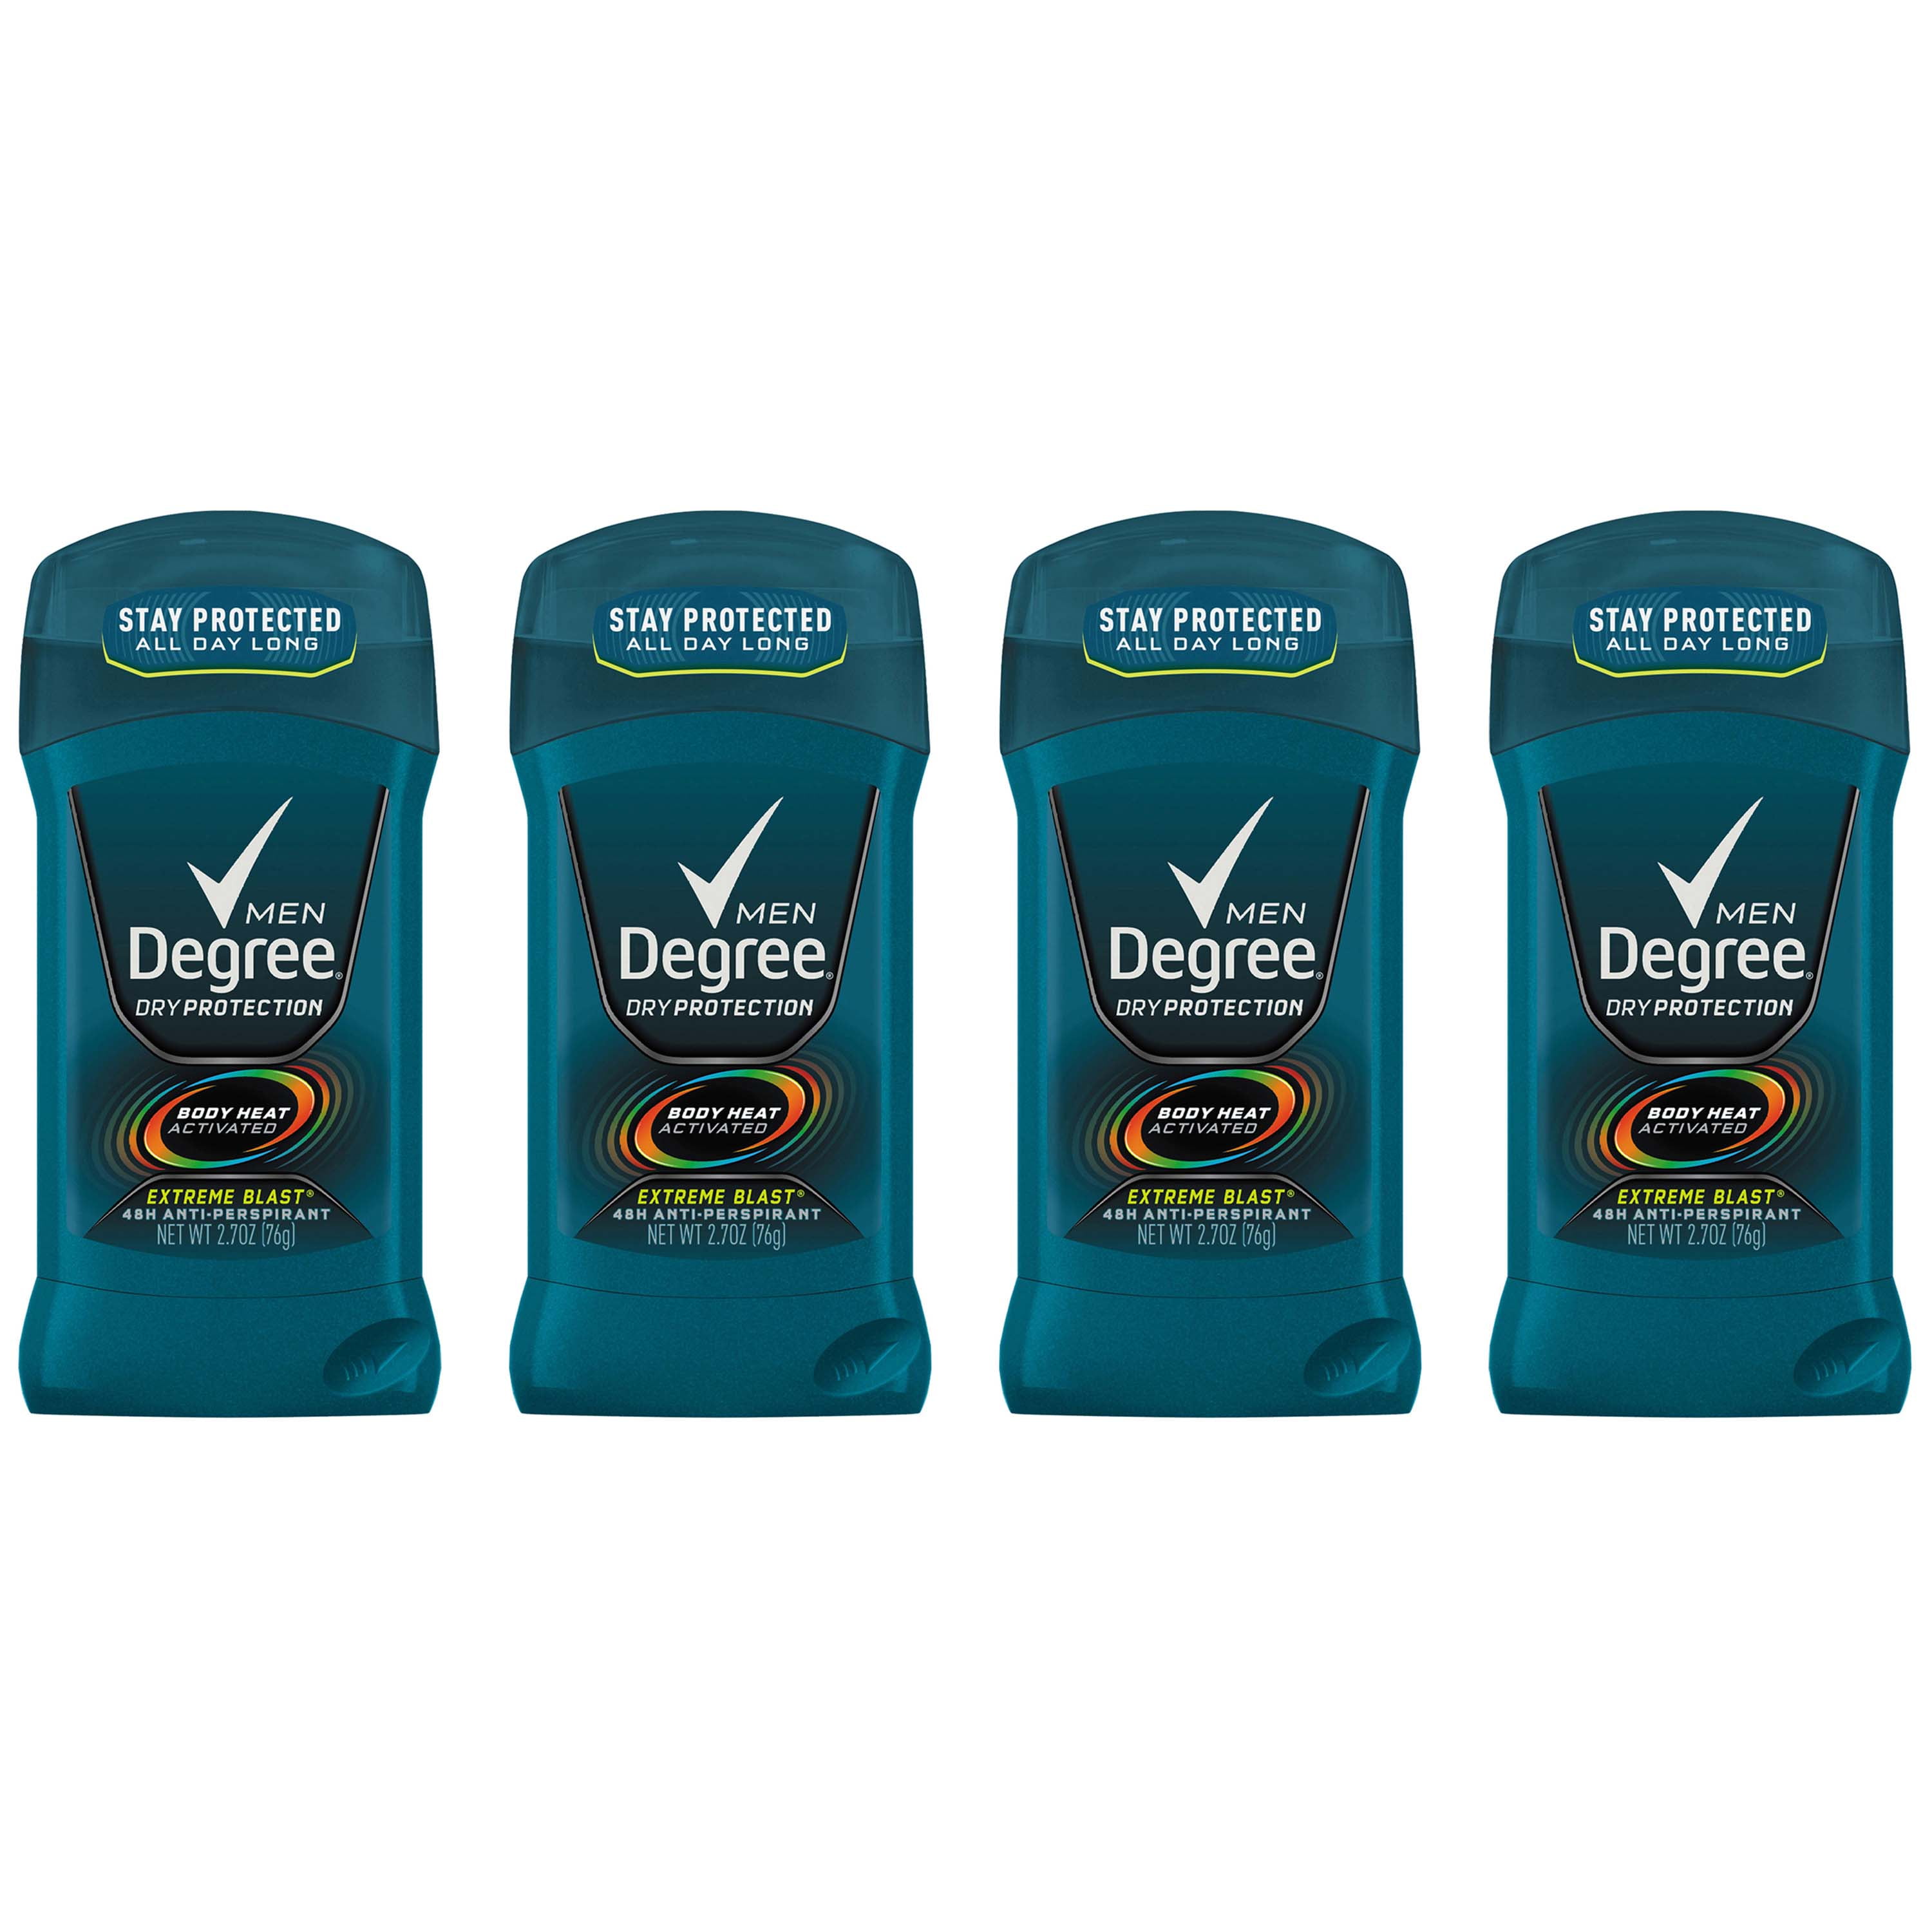 Degree Men Original Protection Antiperspirant Deodorant Extreme Blast 2.7 oz, 4 count -